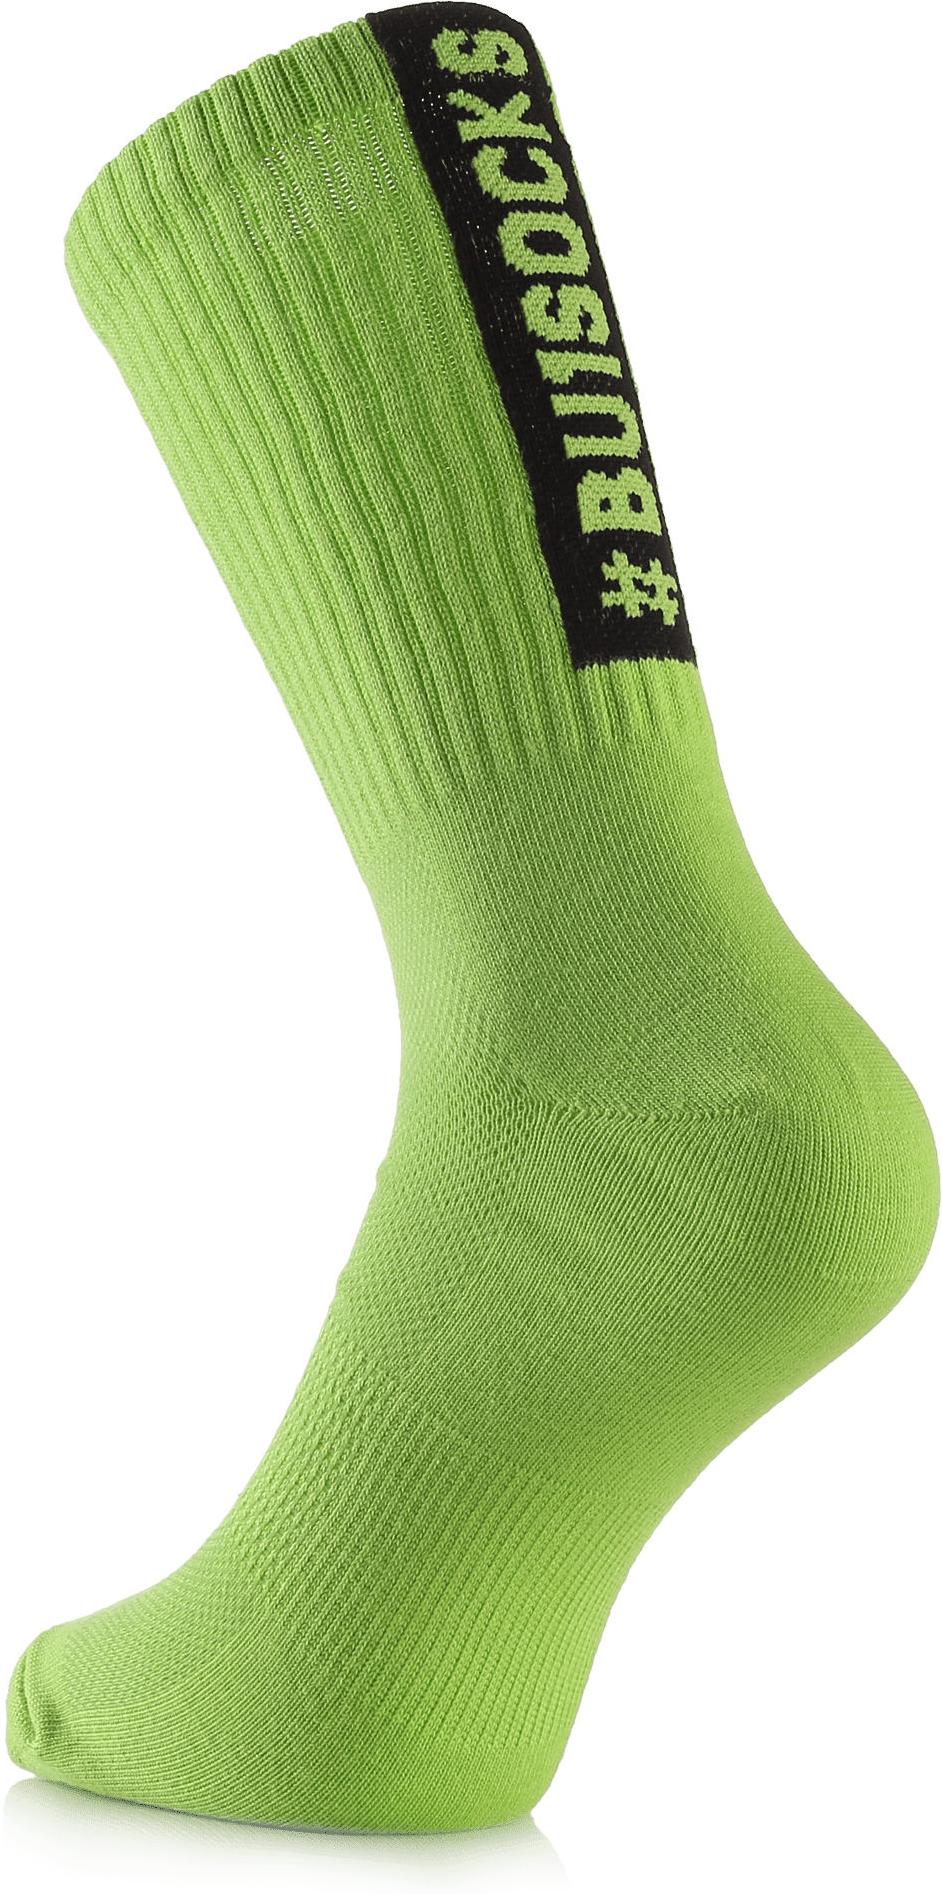 BU1 sports socks neon yellow